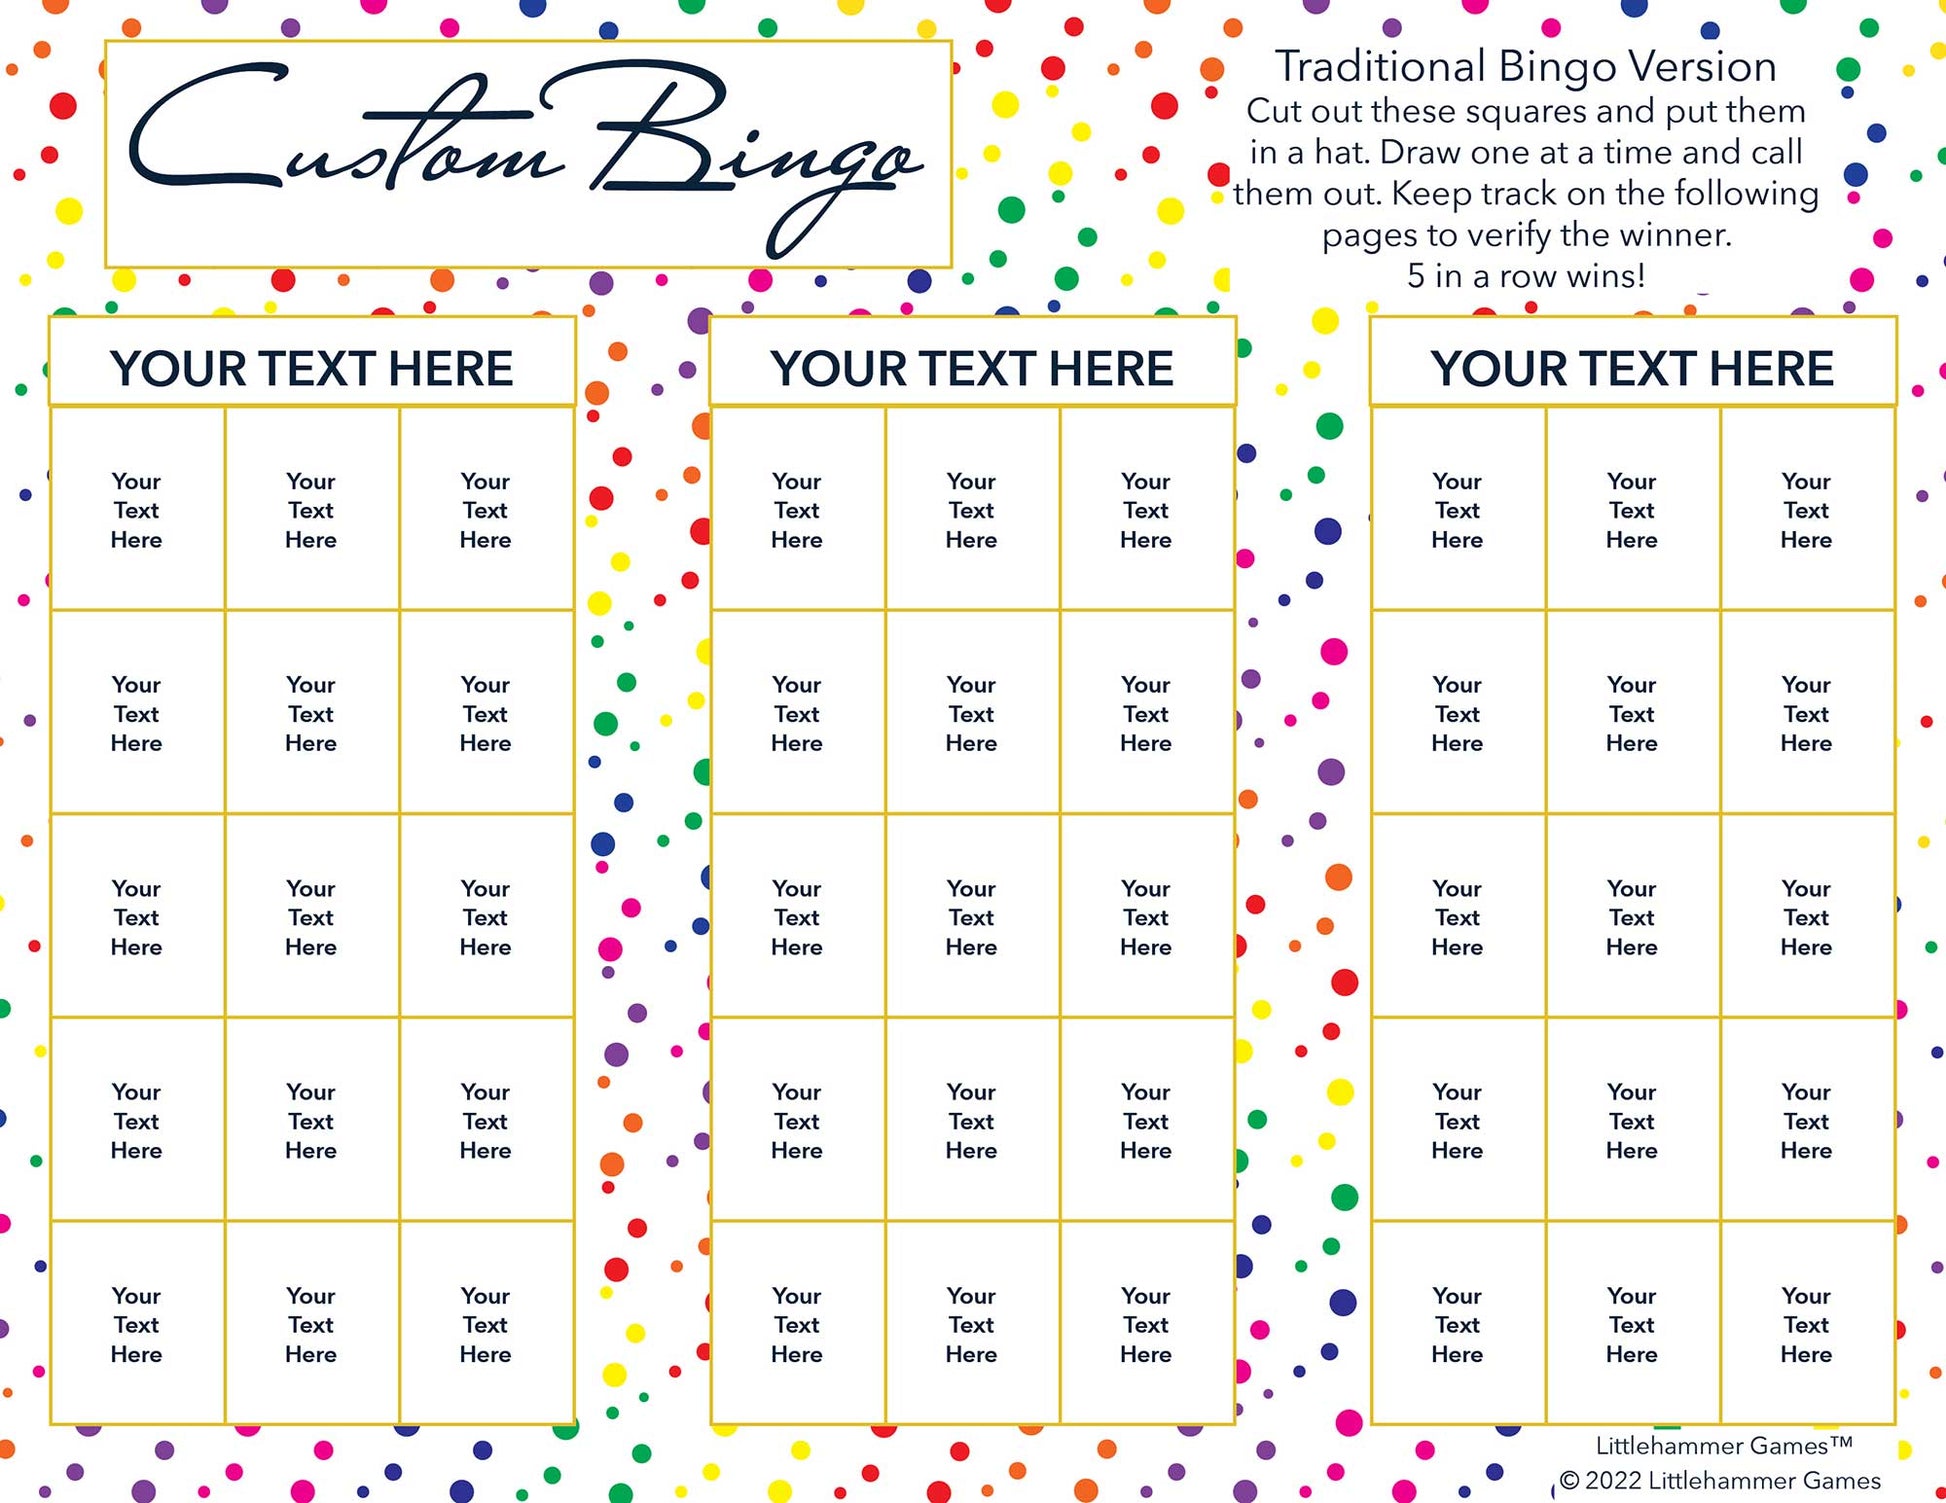 Custom Bingo calling card with a rainbow polka dot background